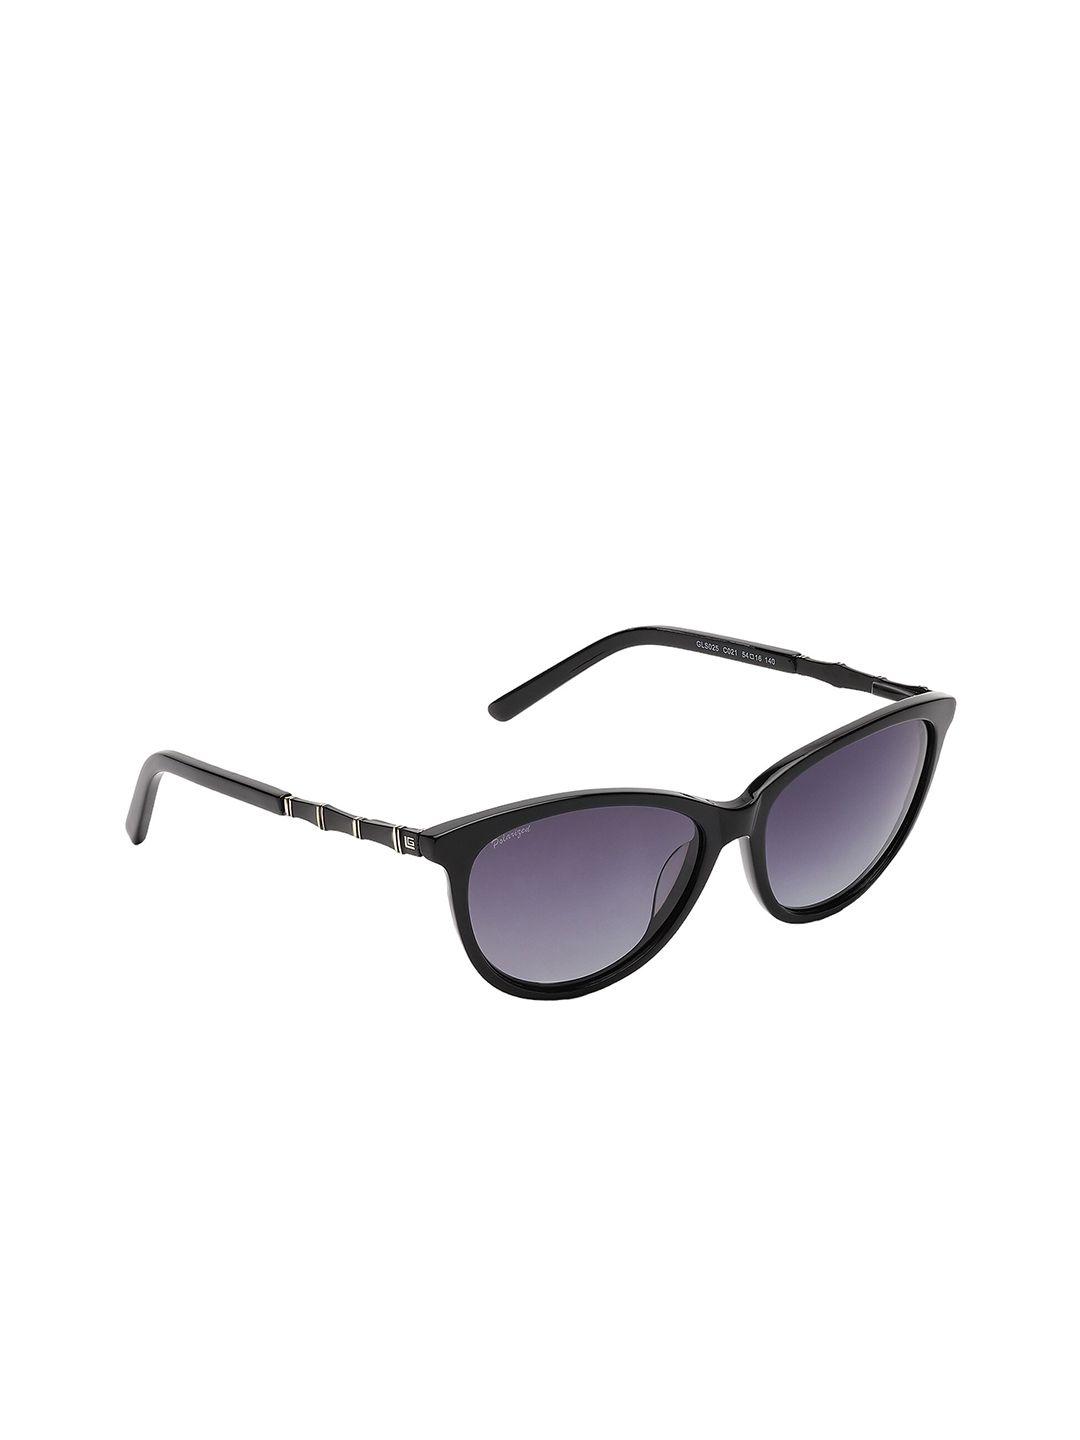 guy laroche women cateye sunglasses with uv protected lens